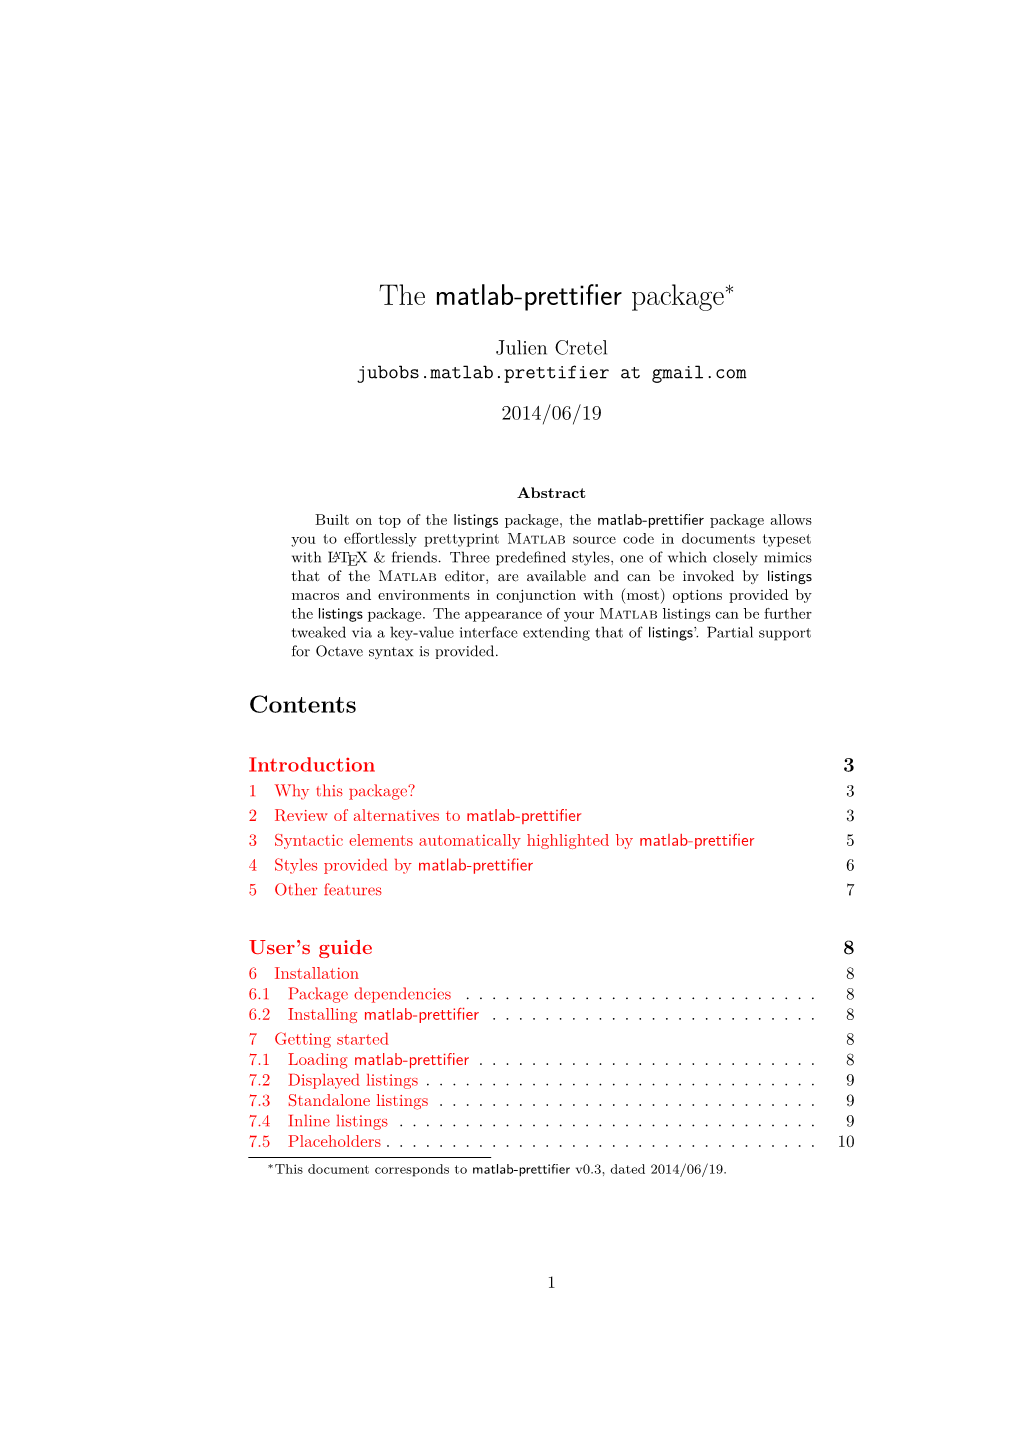 The Matlab-Prettifier Package